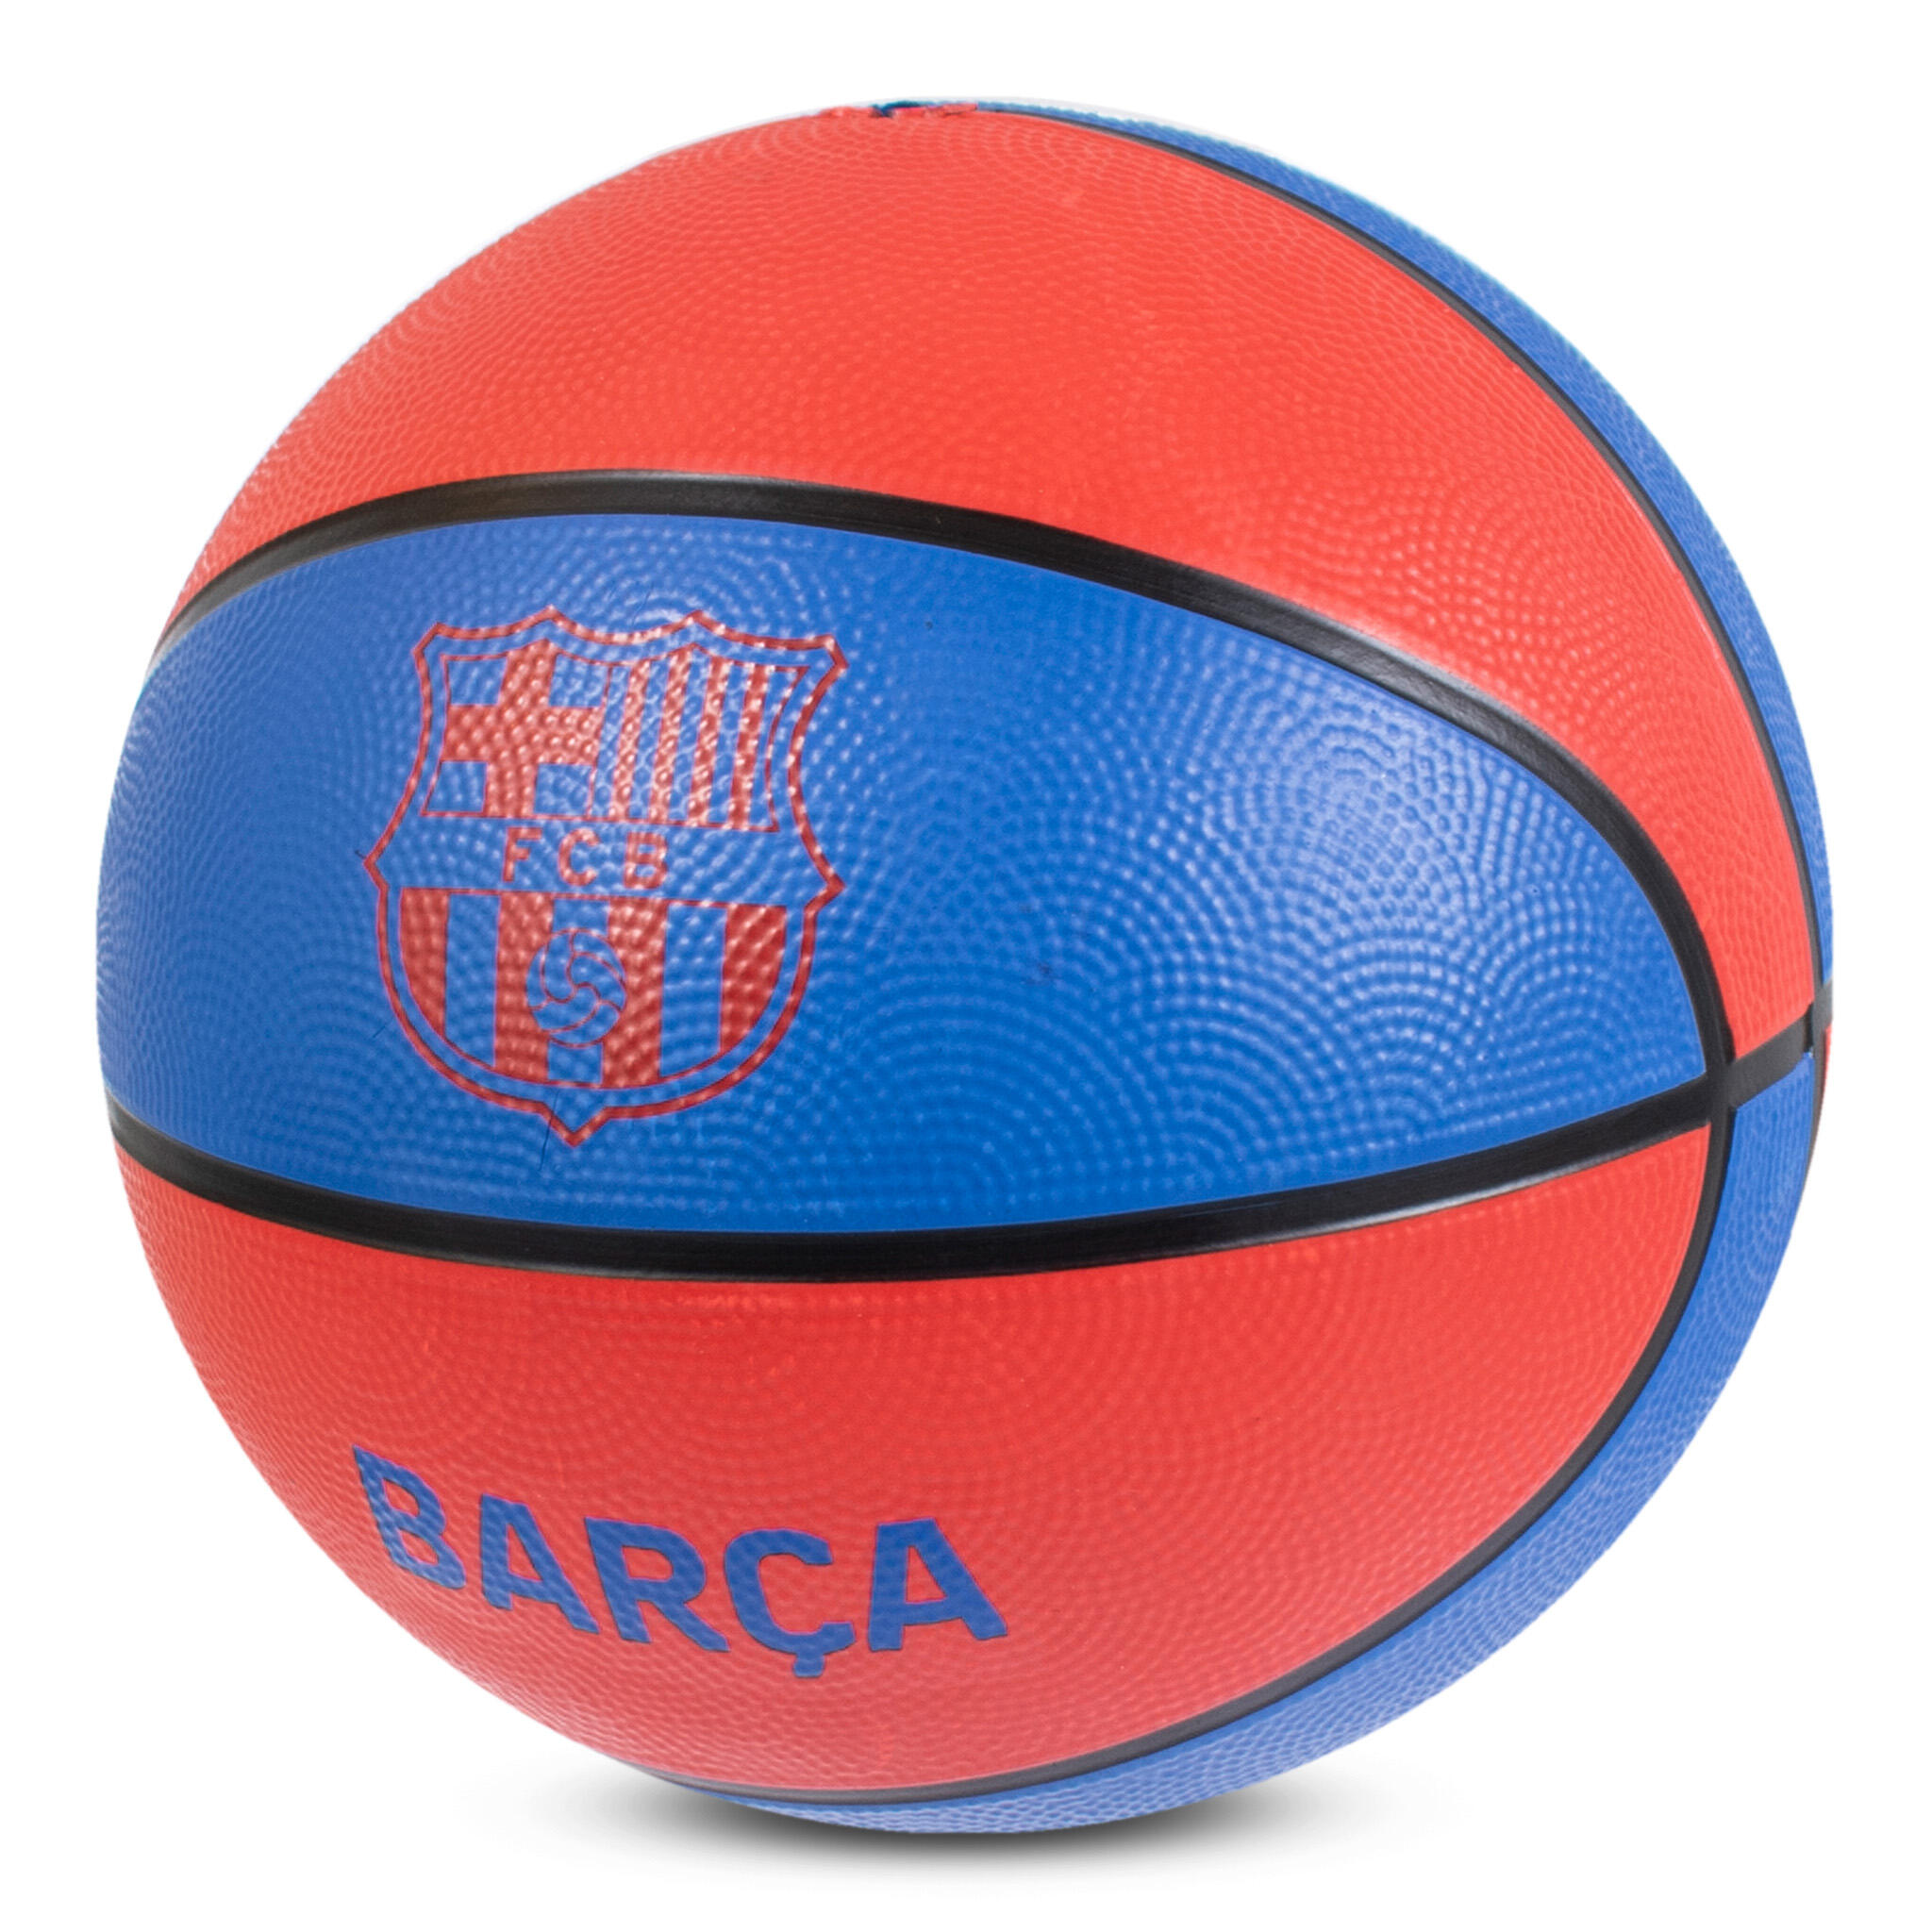 Barcelona Size 7 Basketball 2/5